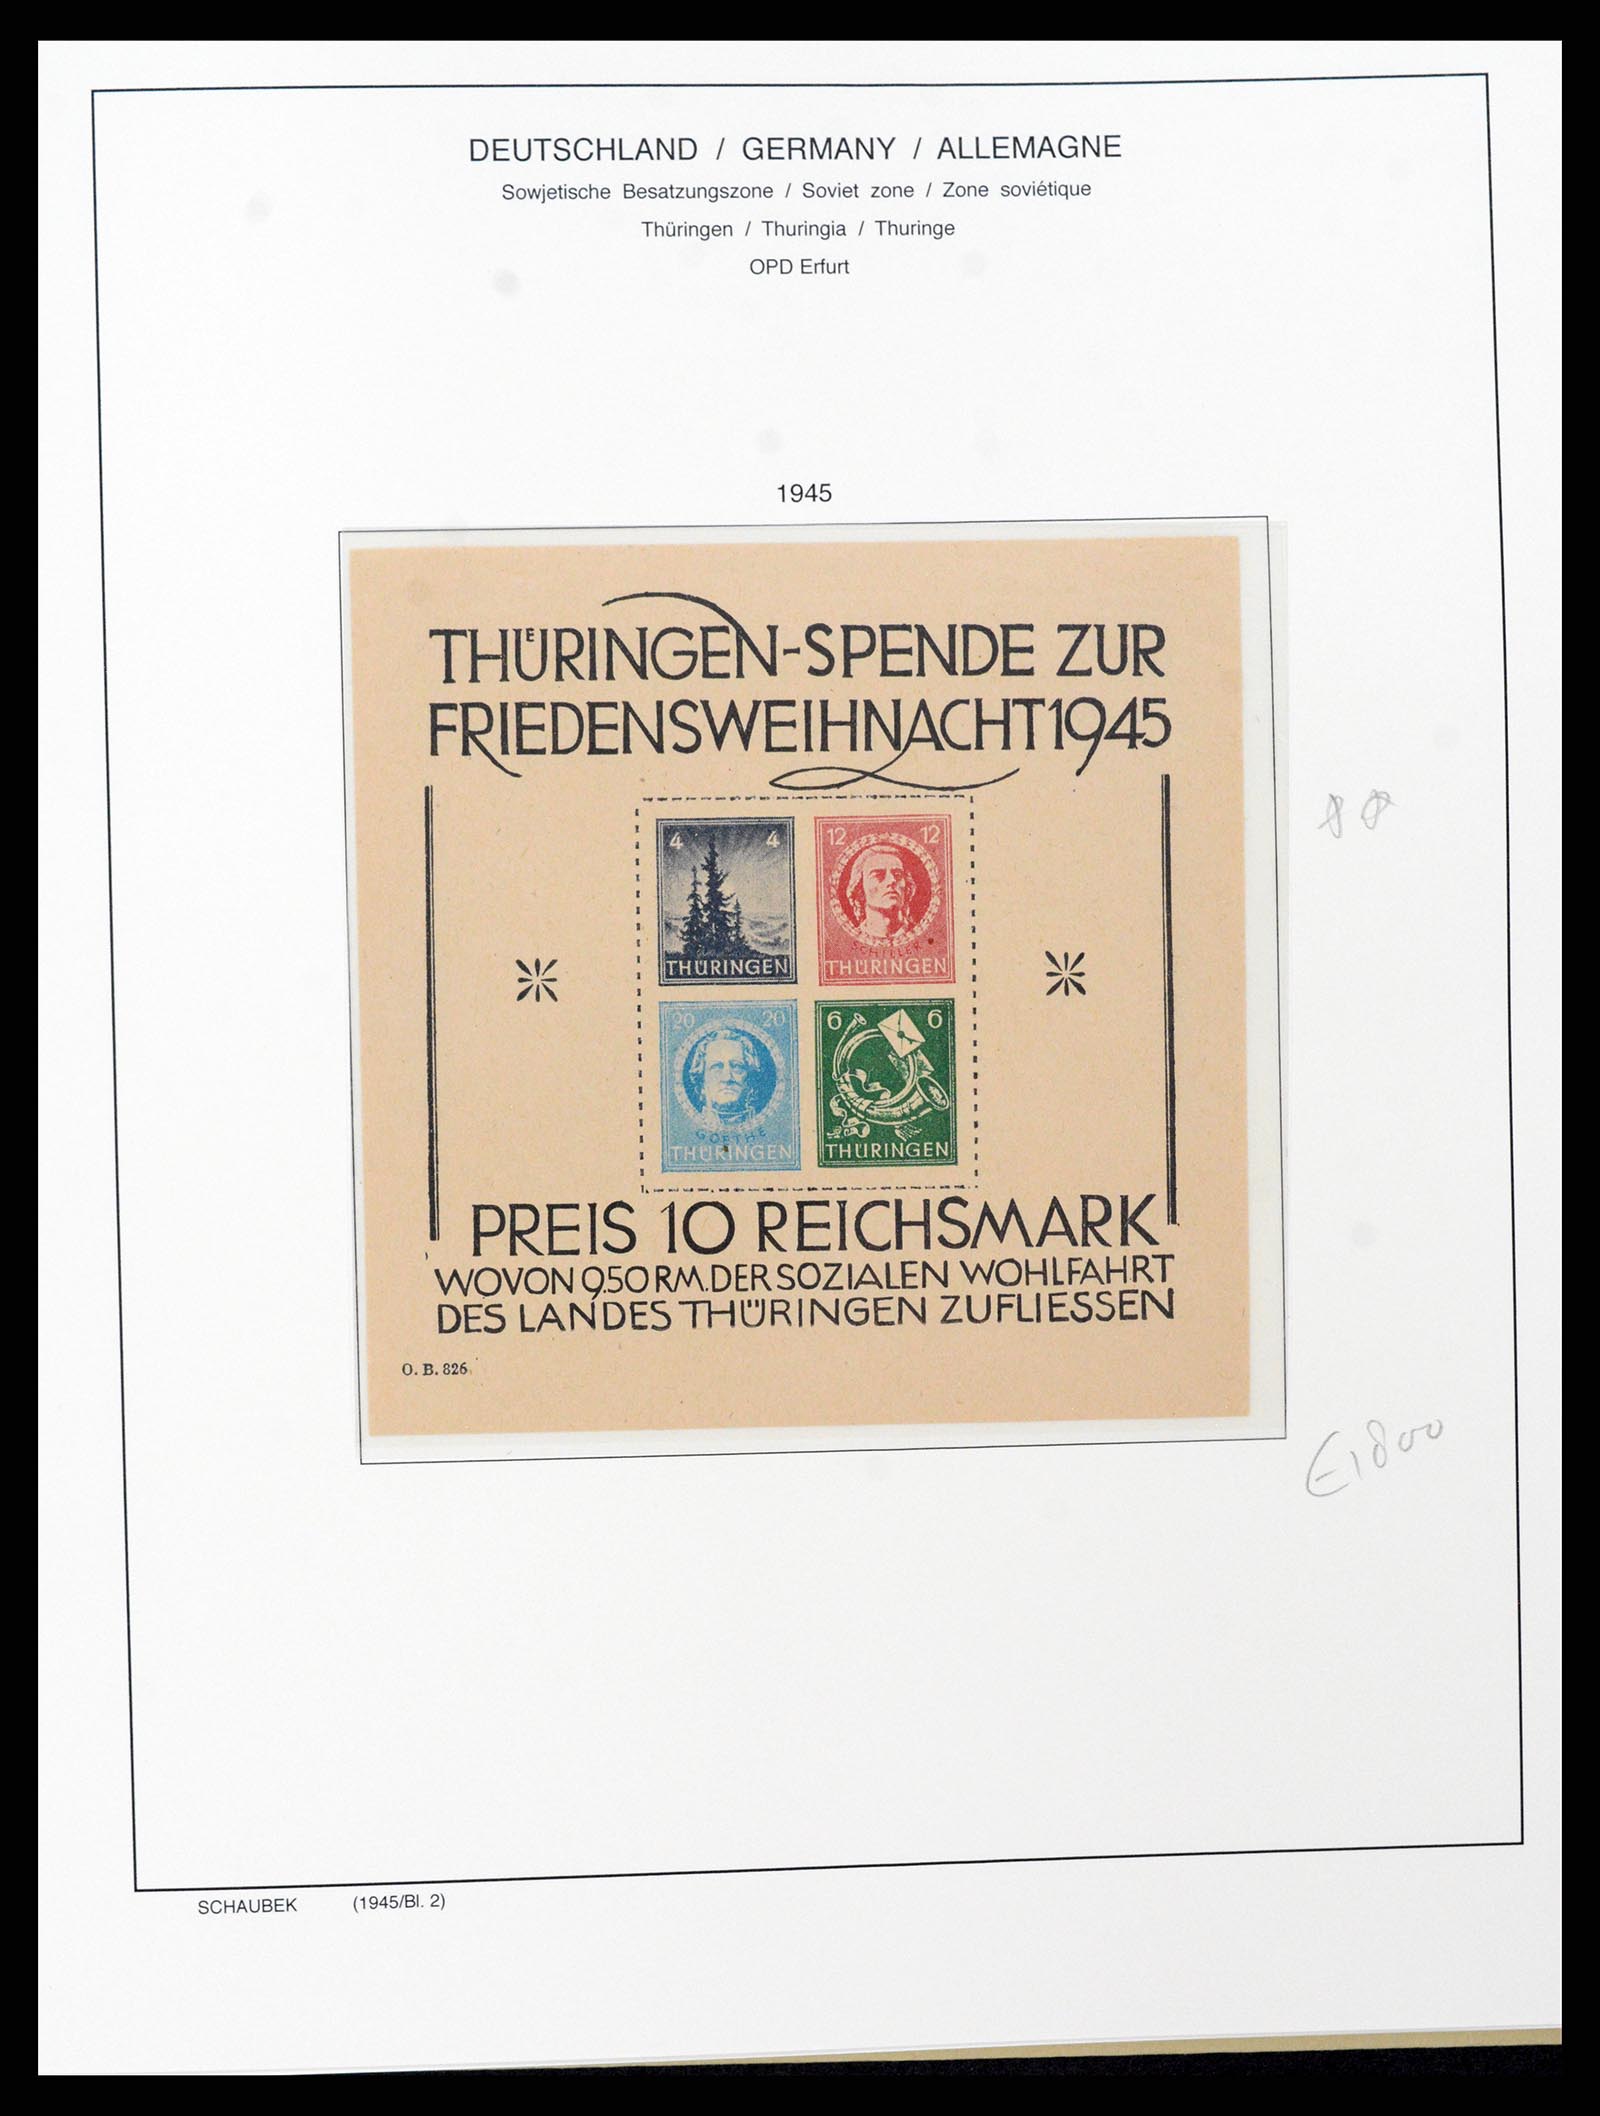 37645 033 - Stamp collection 37645 German Zones 1945-1949.